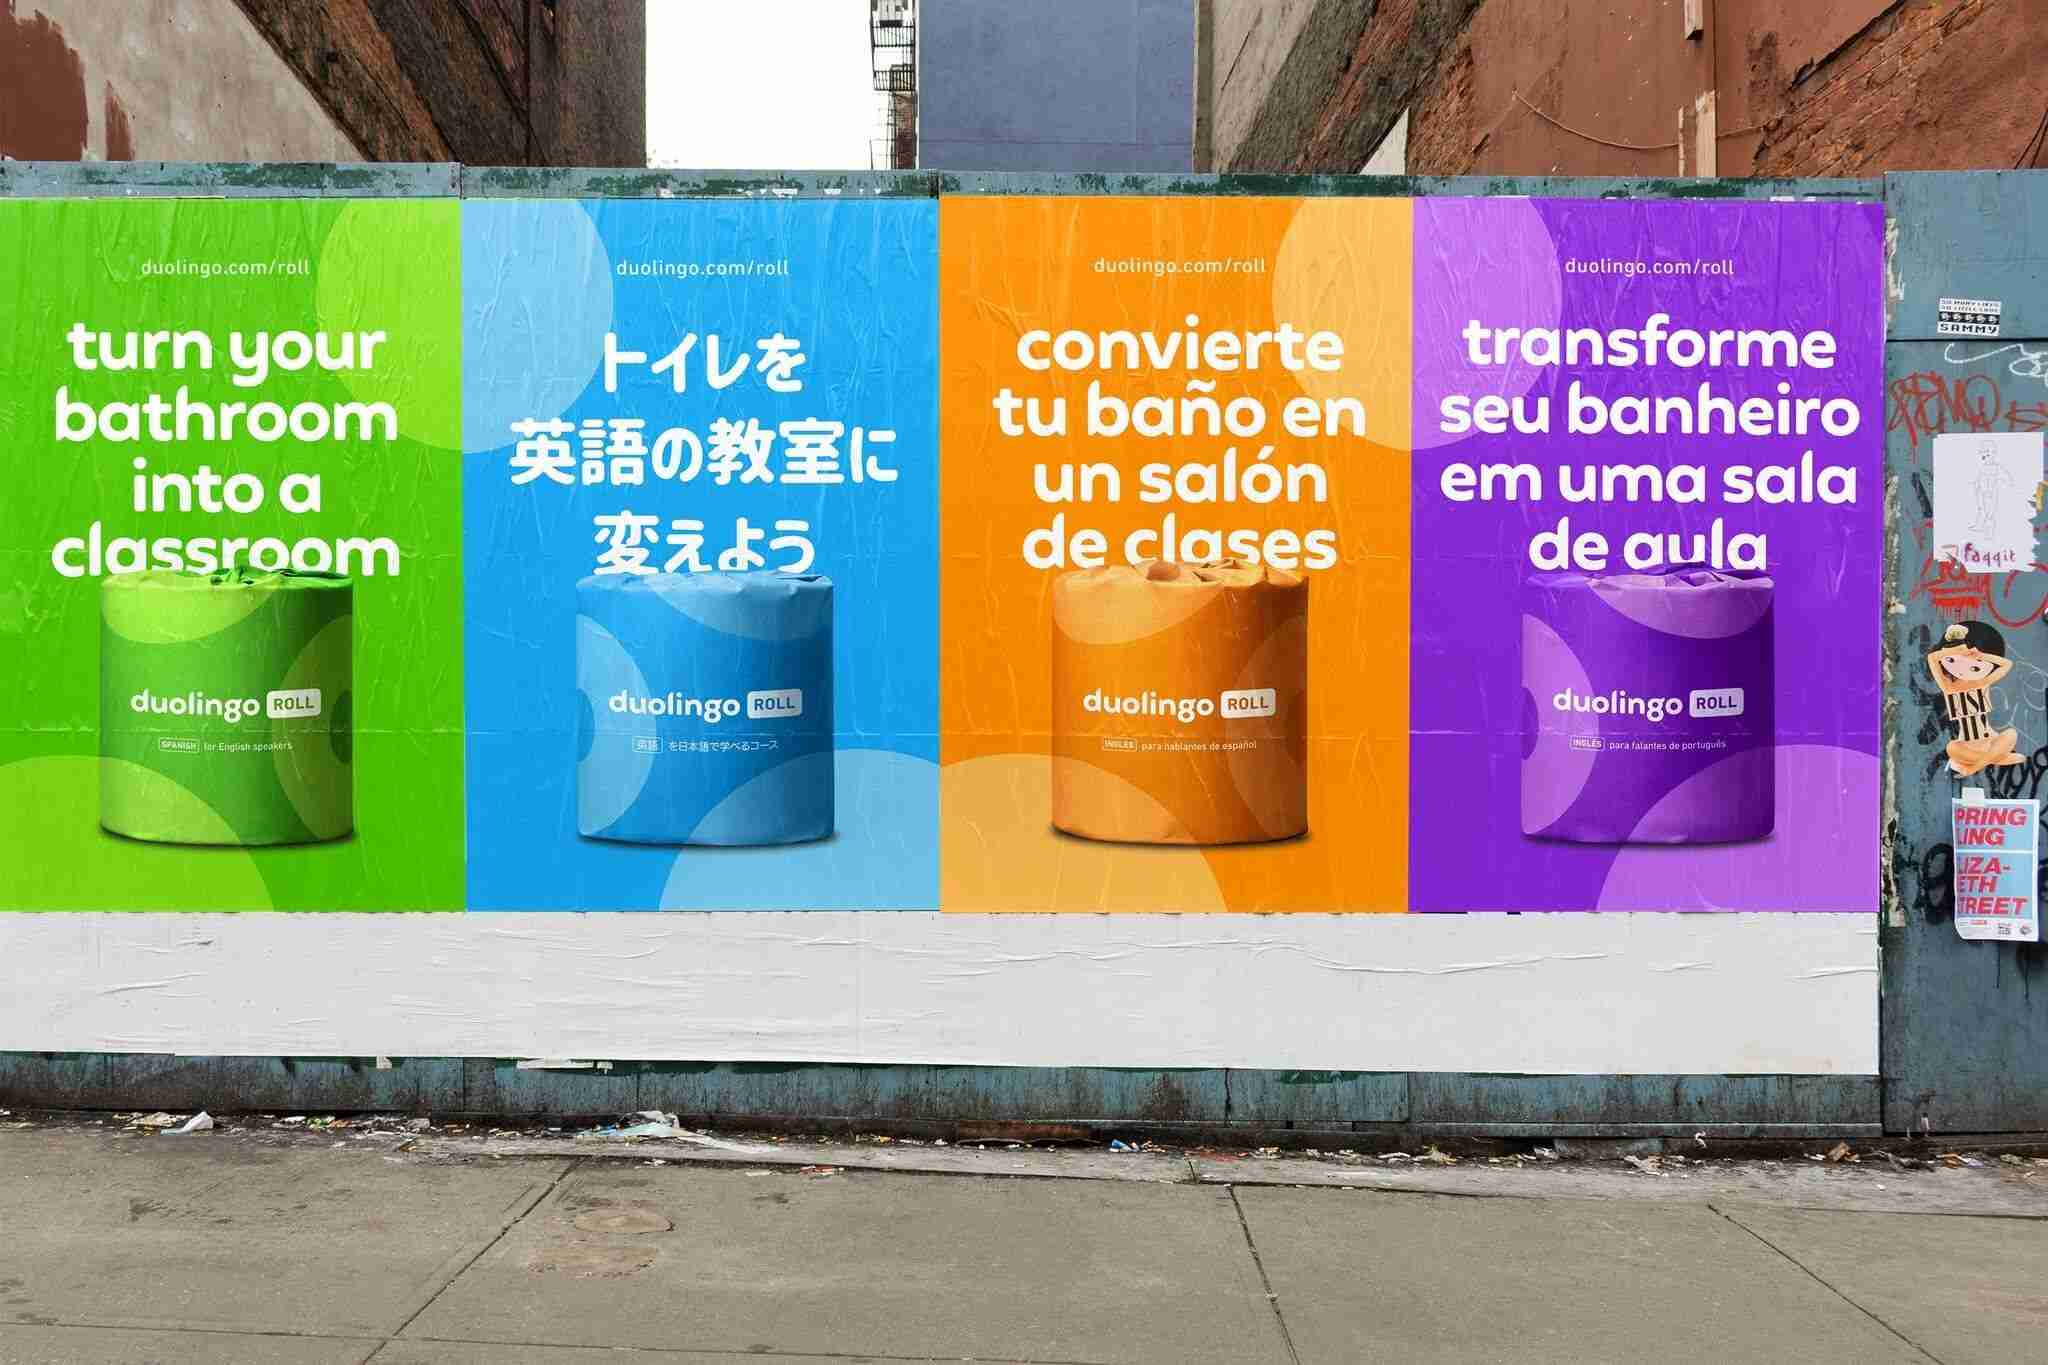 Duolingo ra mắt giấy vệ sinh dạy ngoại ngữ